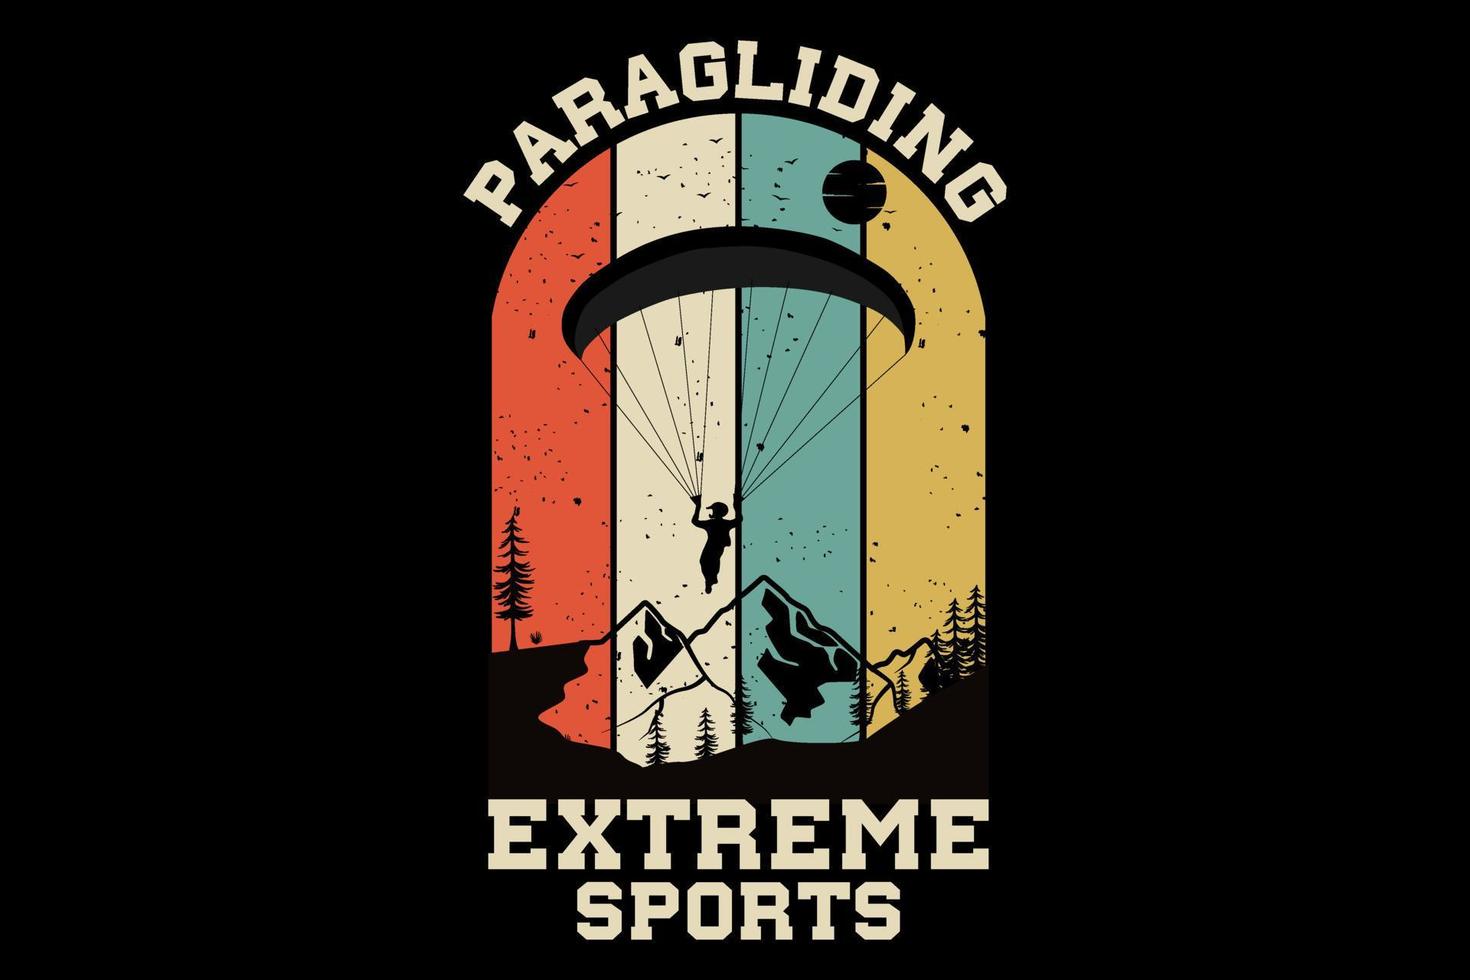 Paragliding extreme sports design vintage retro vector